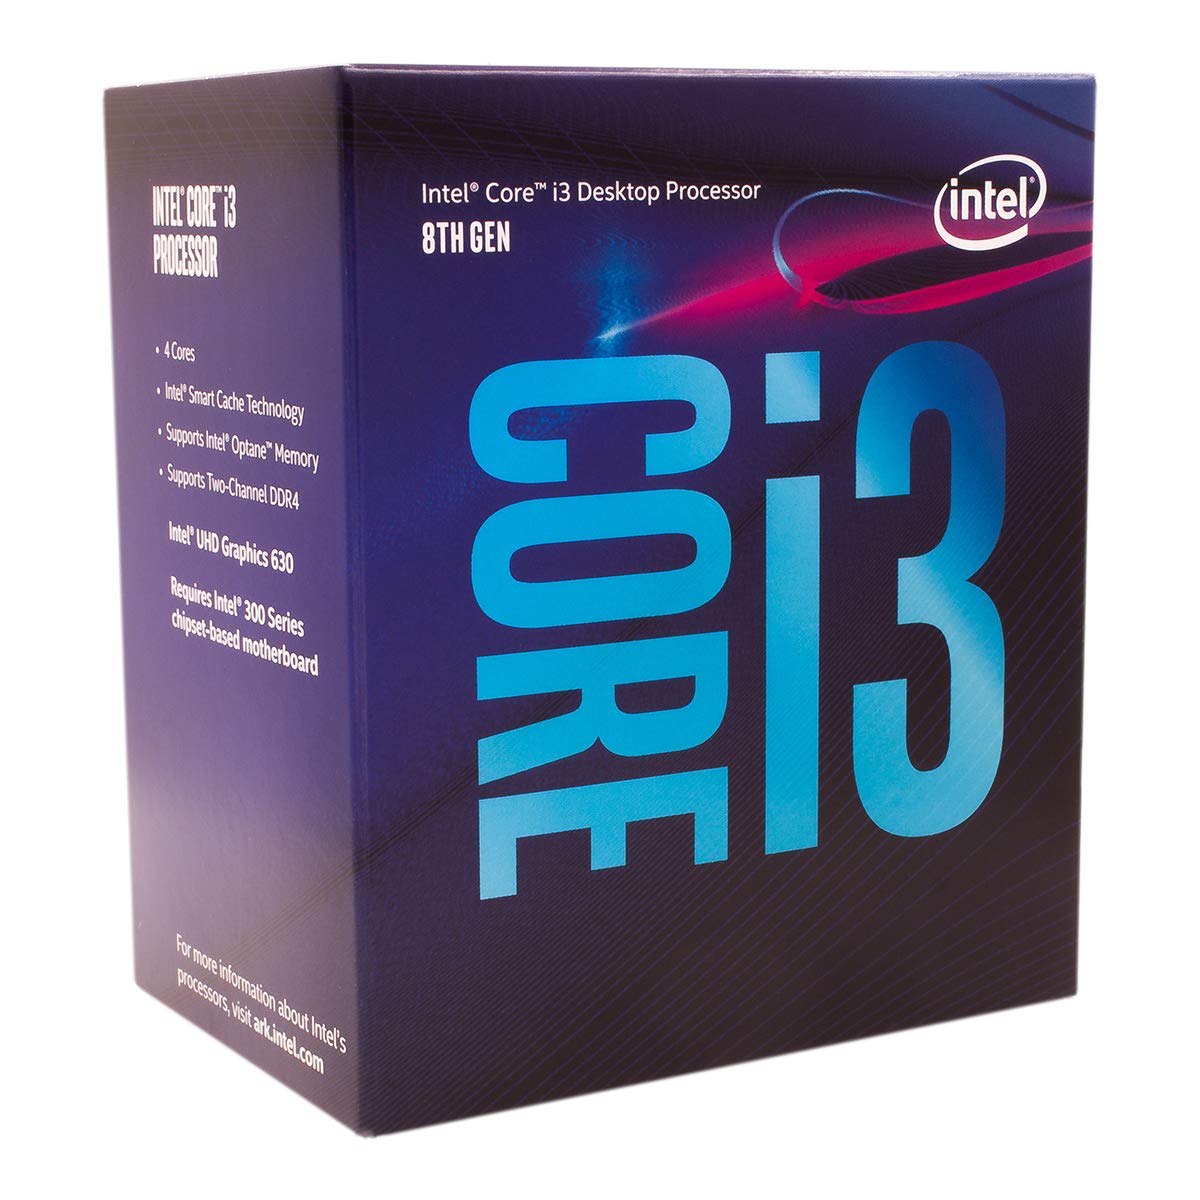 Intel 8Th Generation I3 8100 3.6GHZ Quad Core/ 4 Core/ 4 Threads / Coffee Lake / Lga-1151 Socket